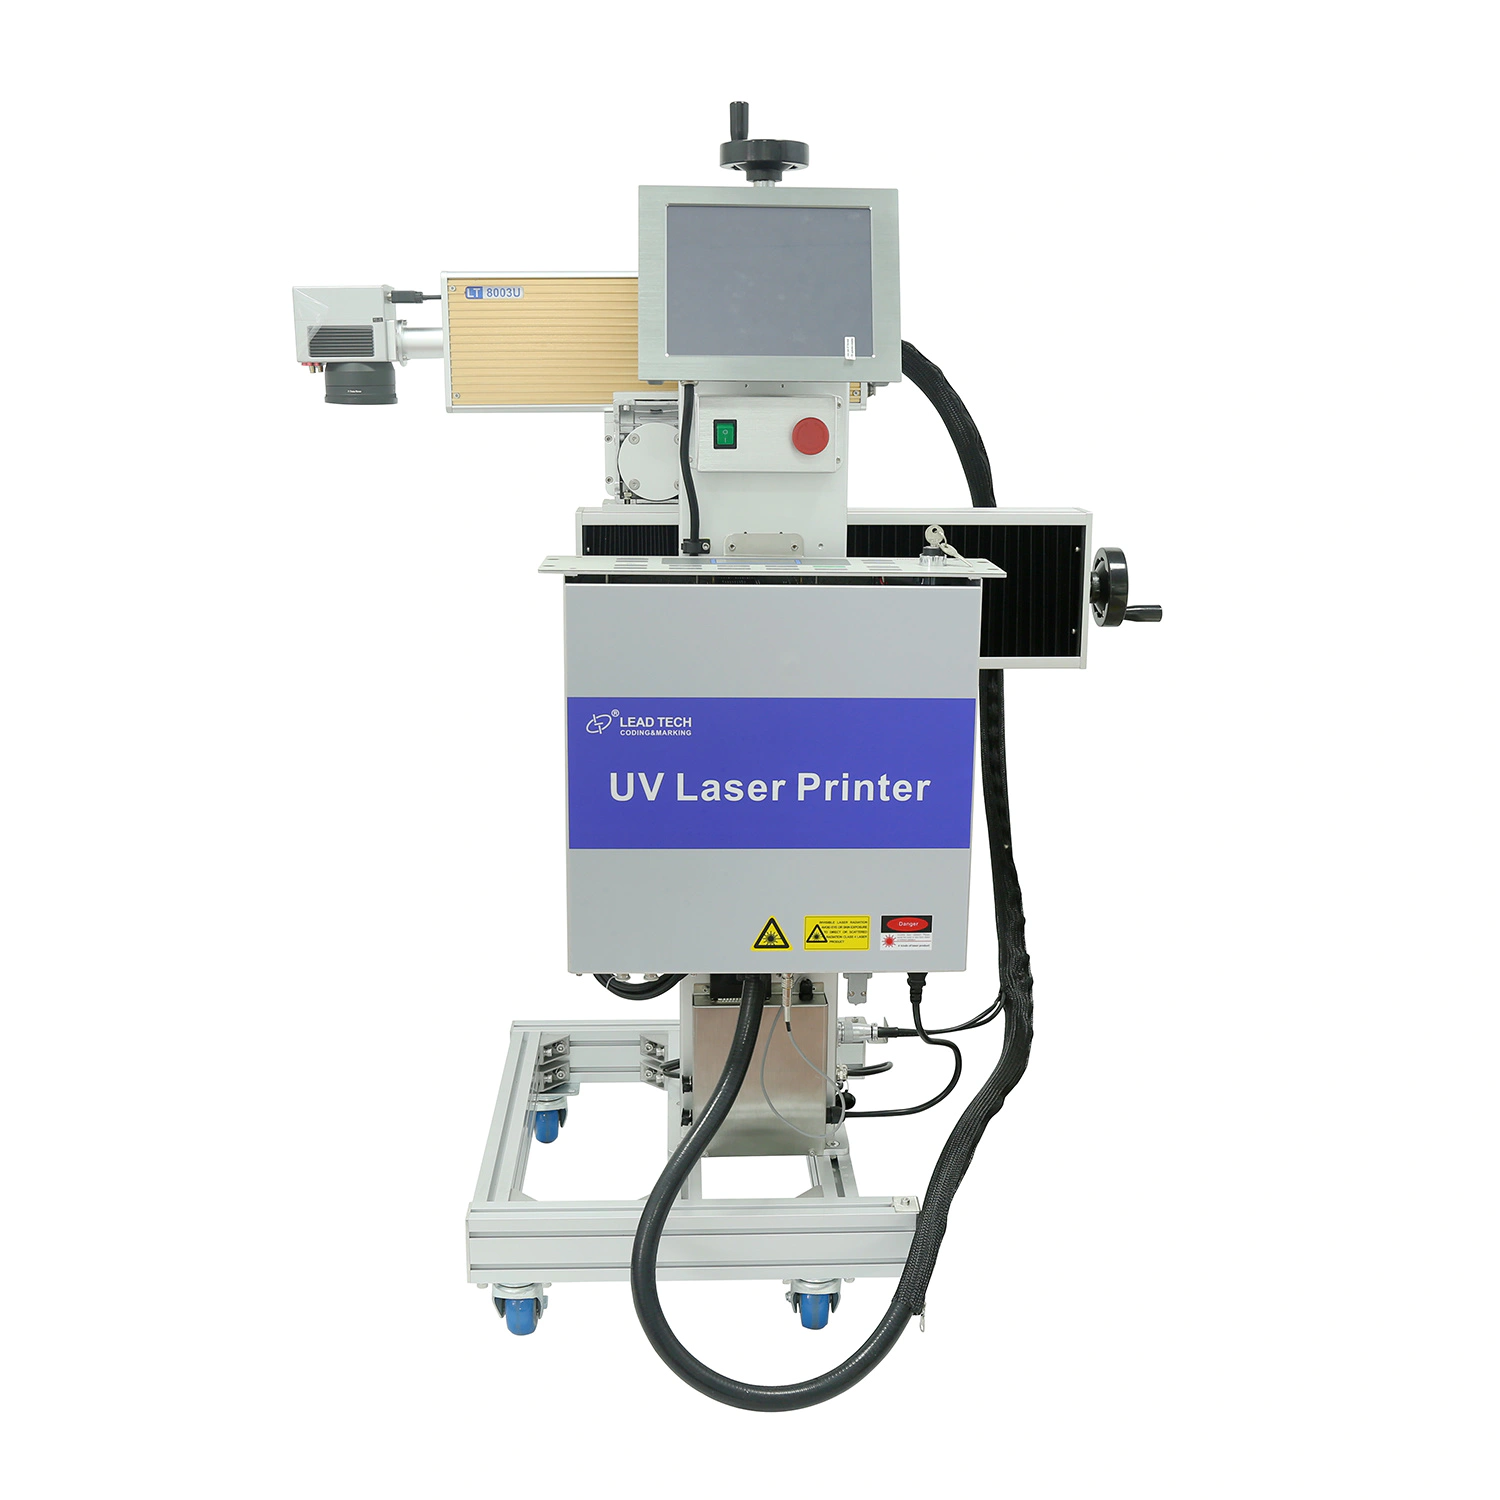 Lead Tech Lt8003u/Lt8005u UV 3W/5W Digital Laser Printer for Plastic, Metal Printing